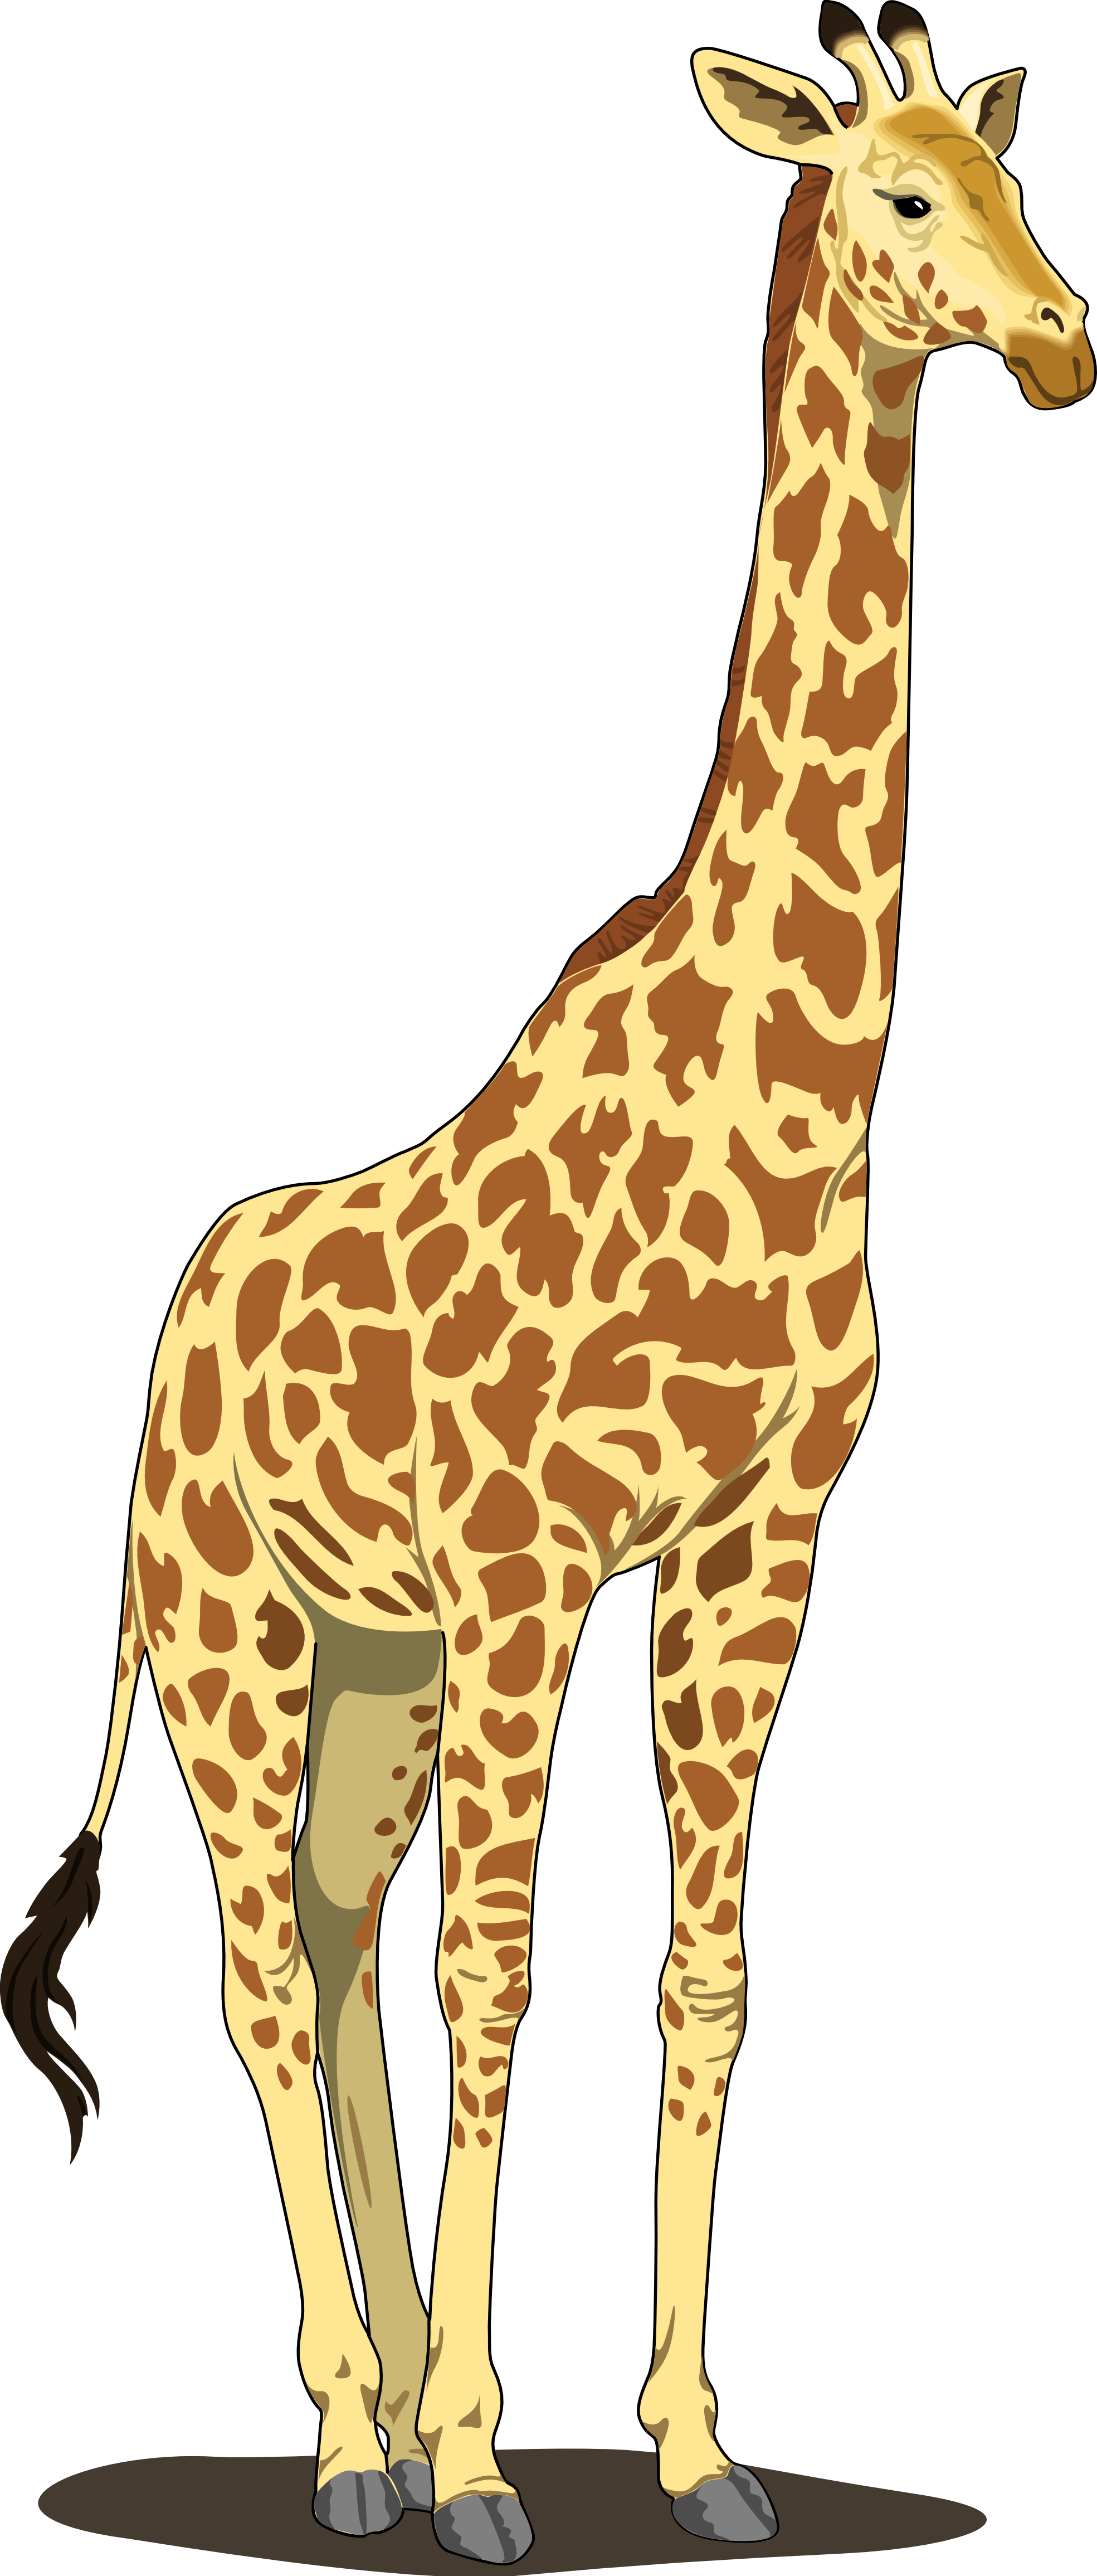 Giraffe Image Free 